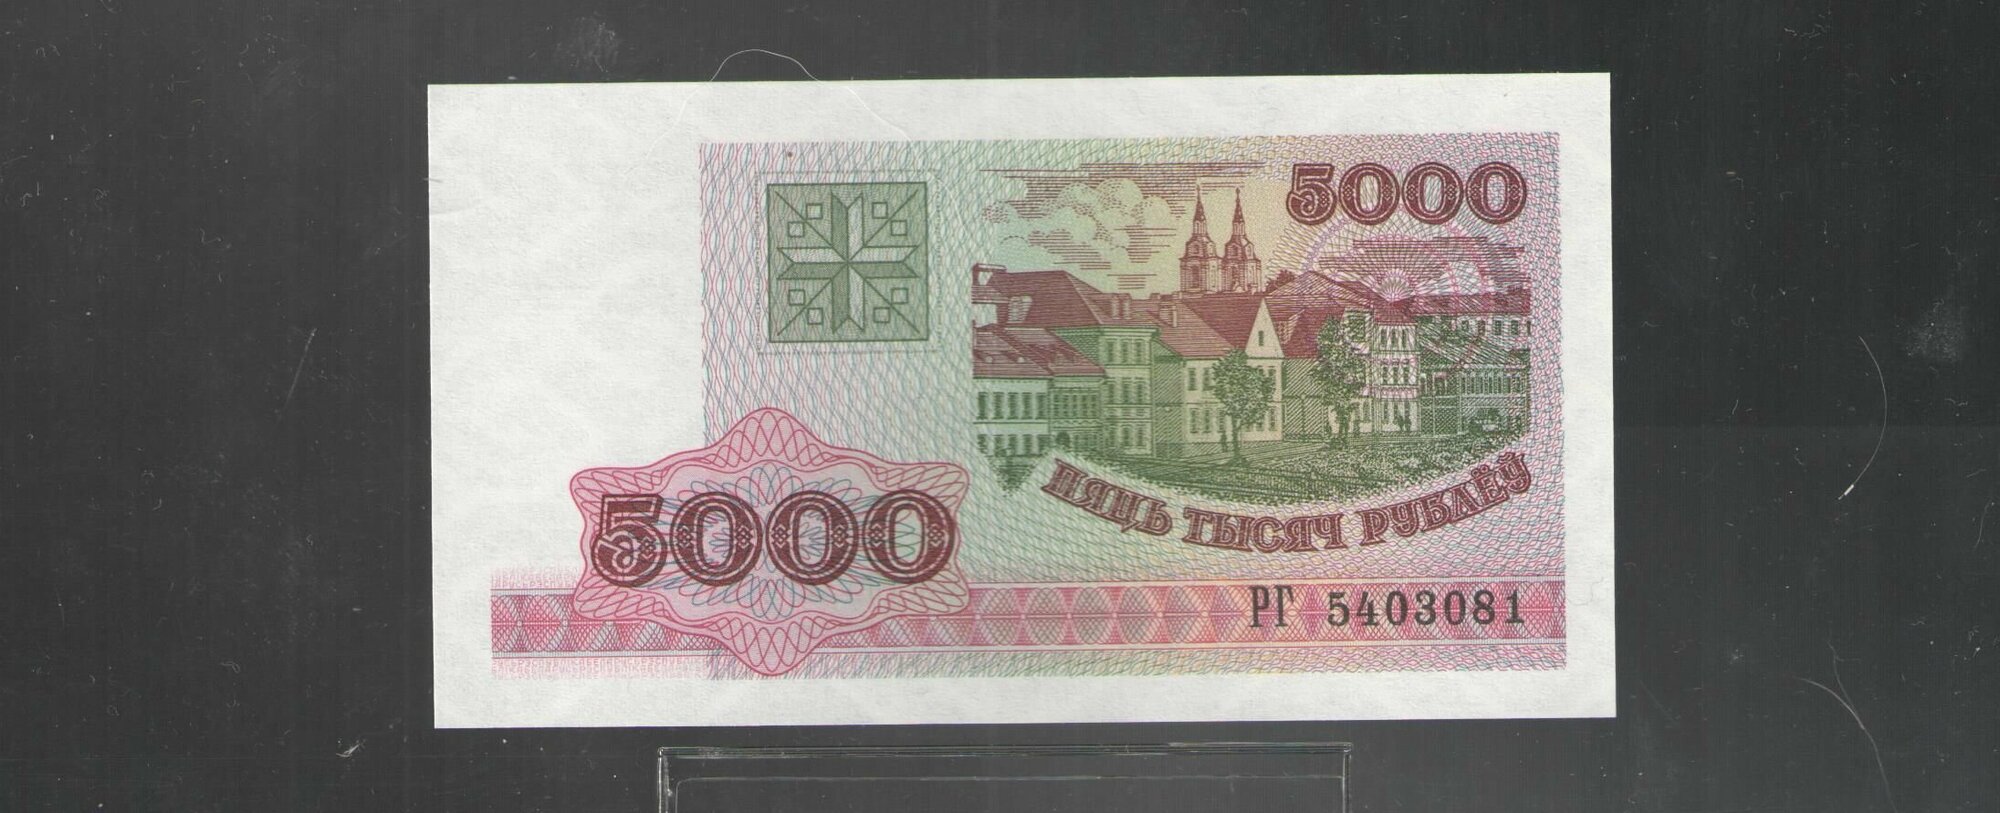 Банкнота 5000 рублей Беларусь 1998